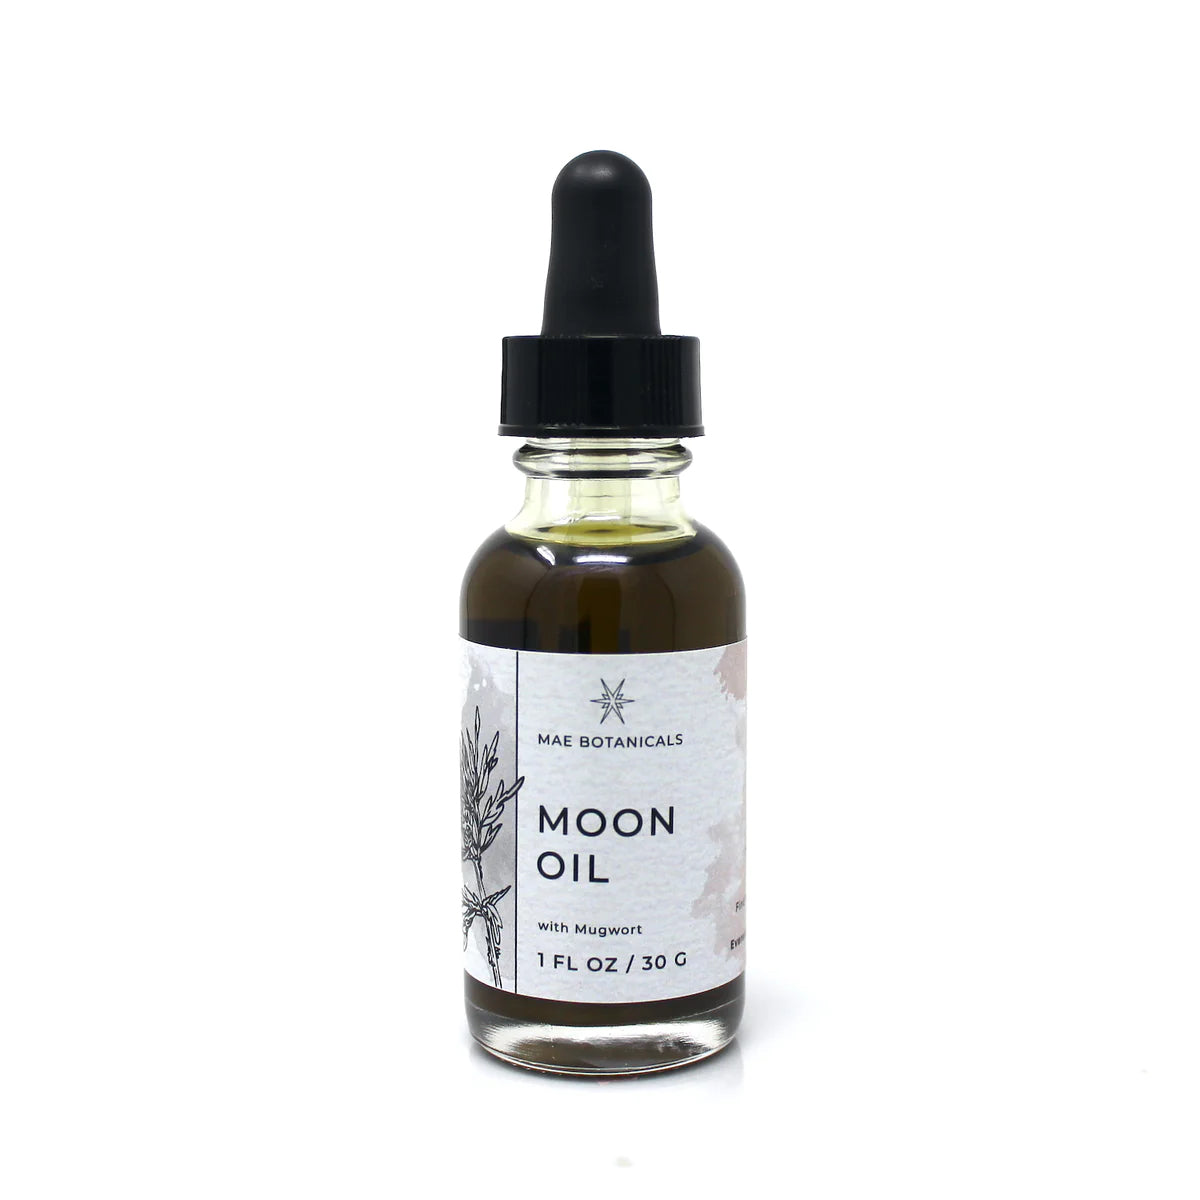 1oz bottle of Moon Oil